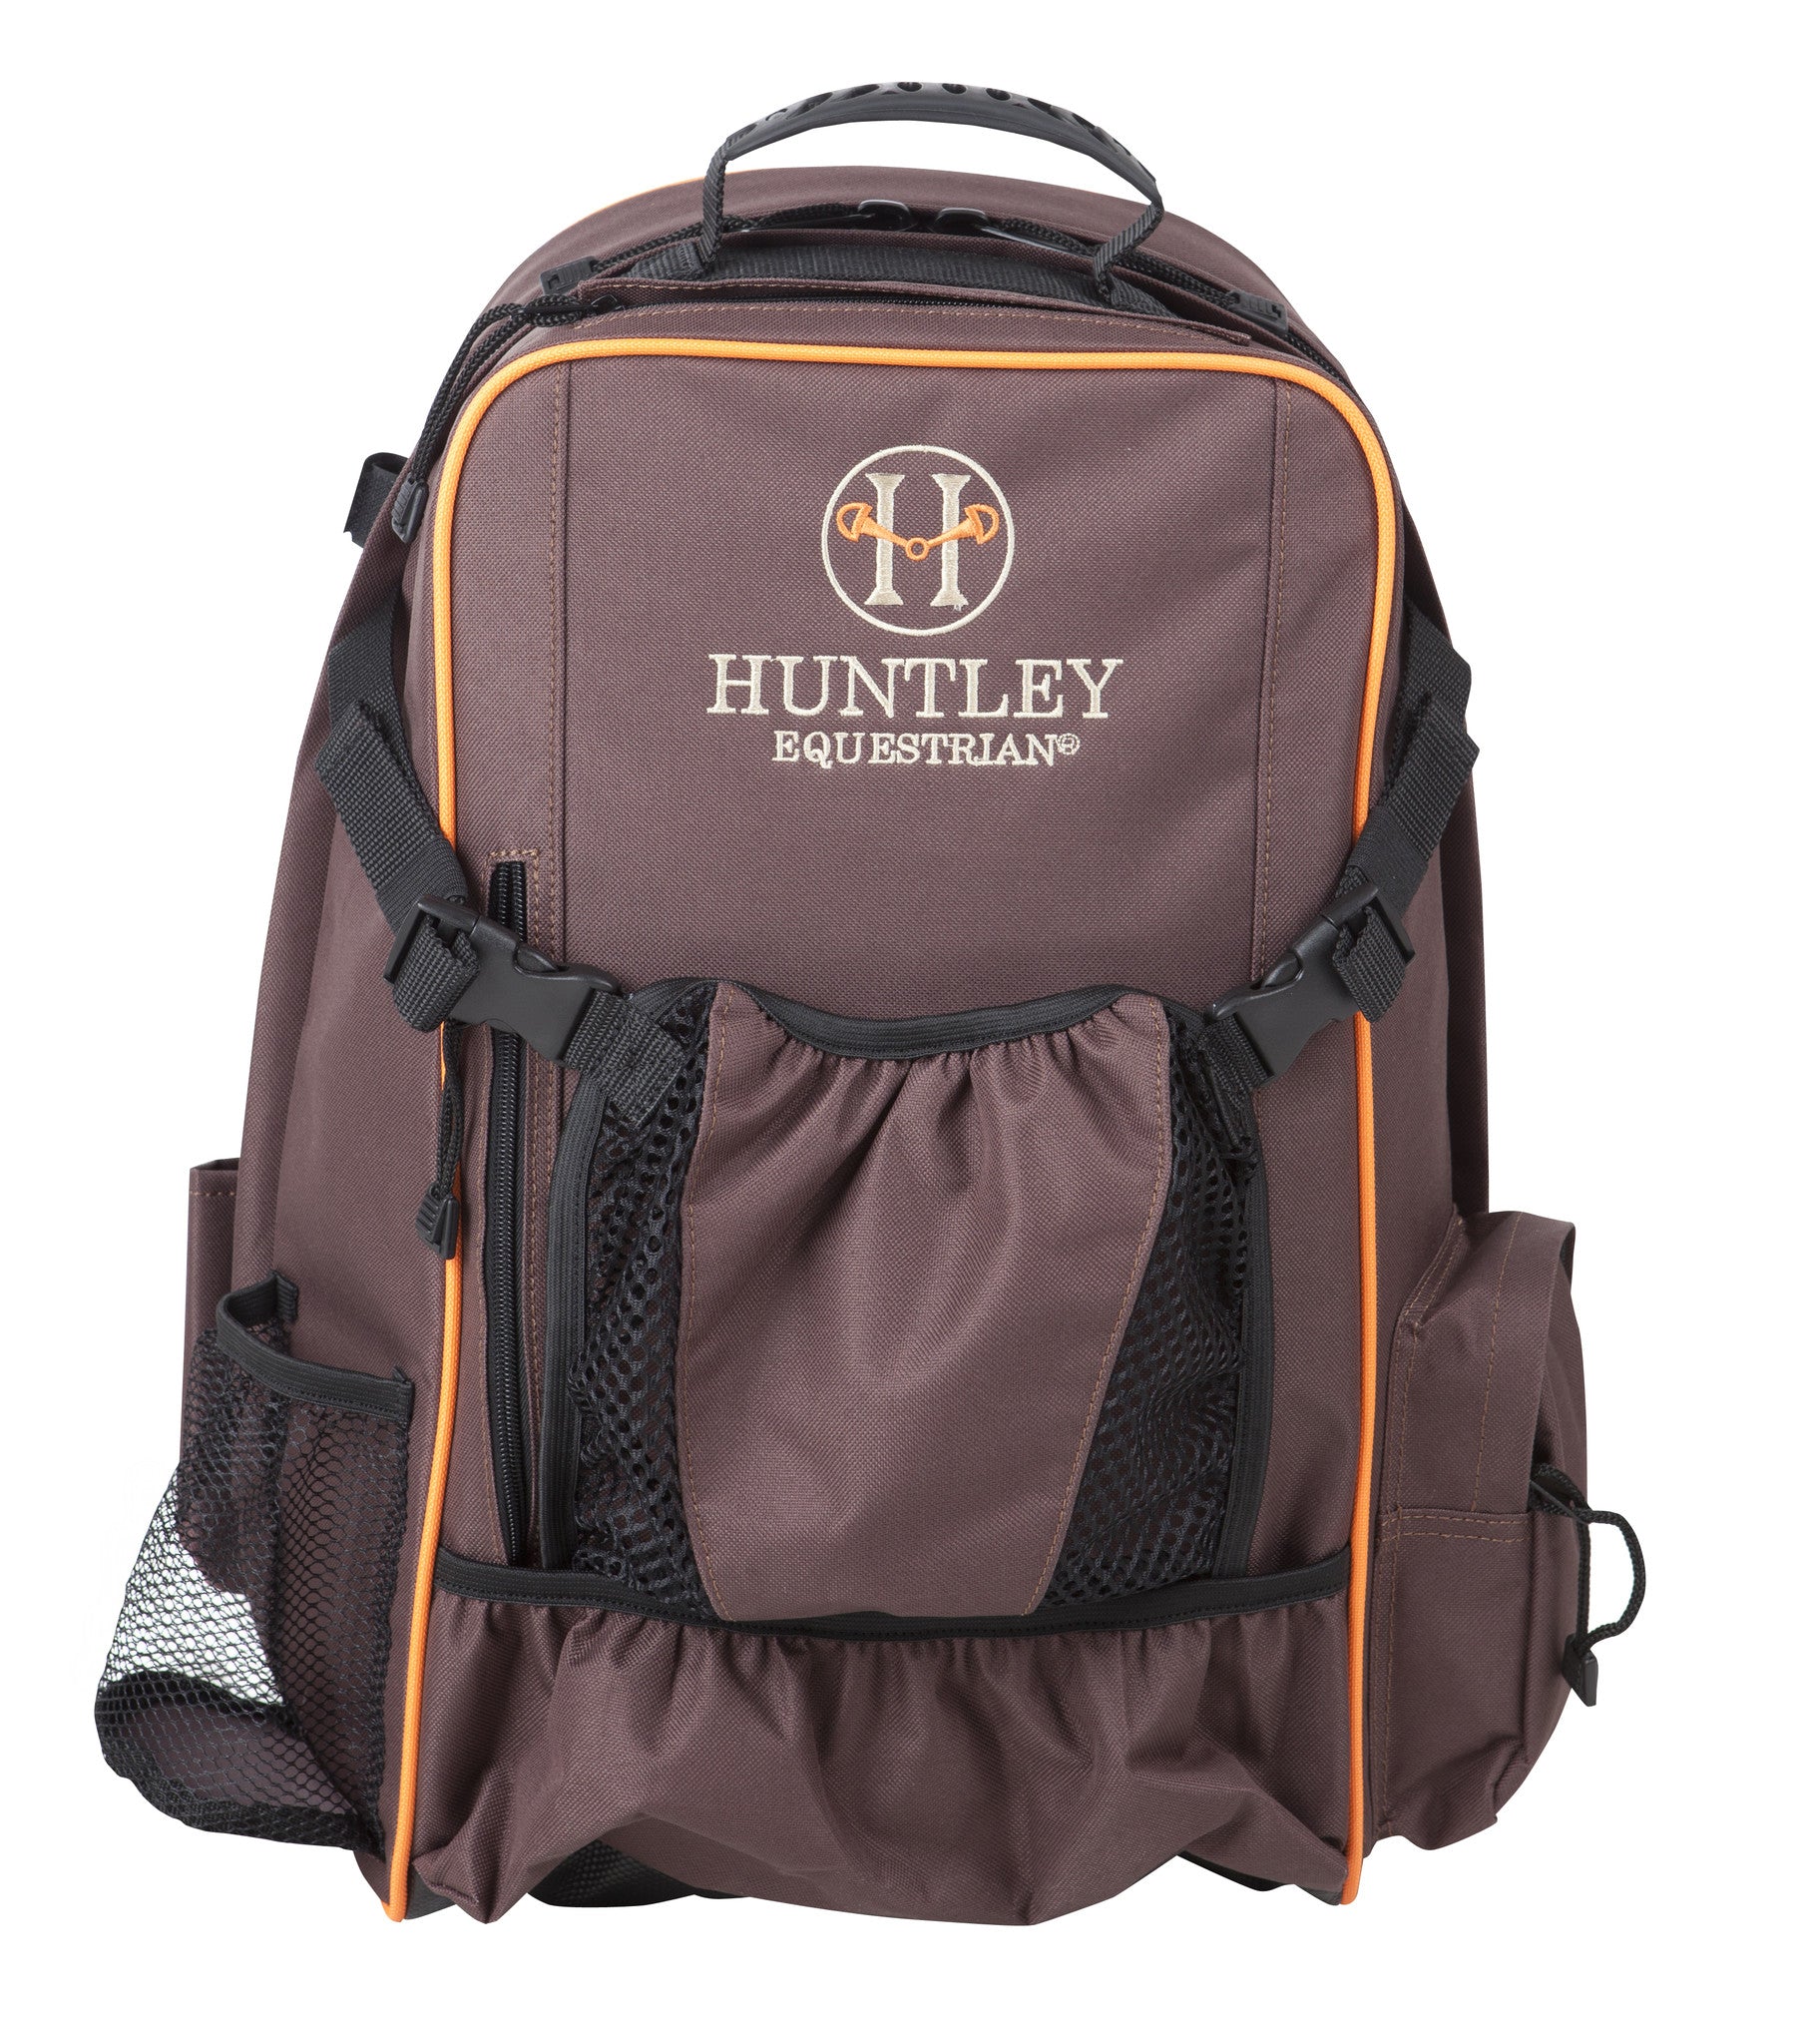 Huntley Equestrian Deluxe Grooming Bag Navy